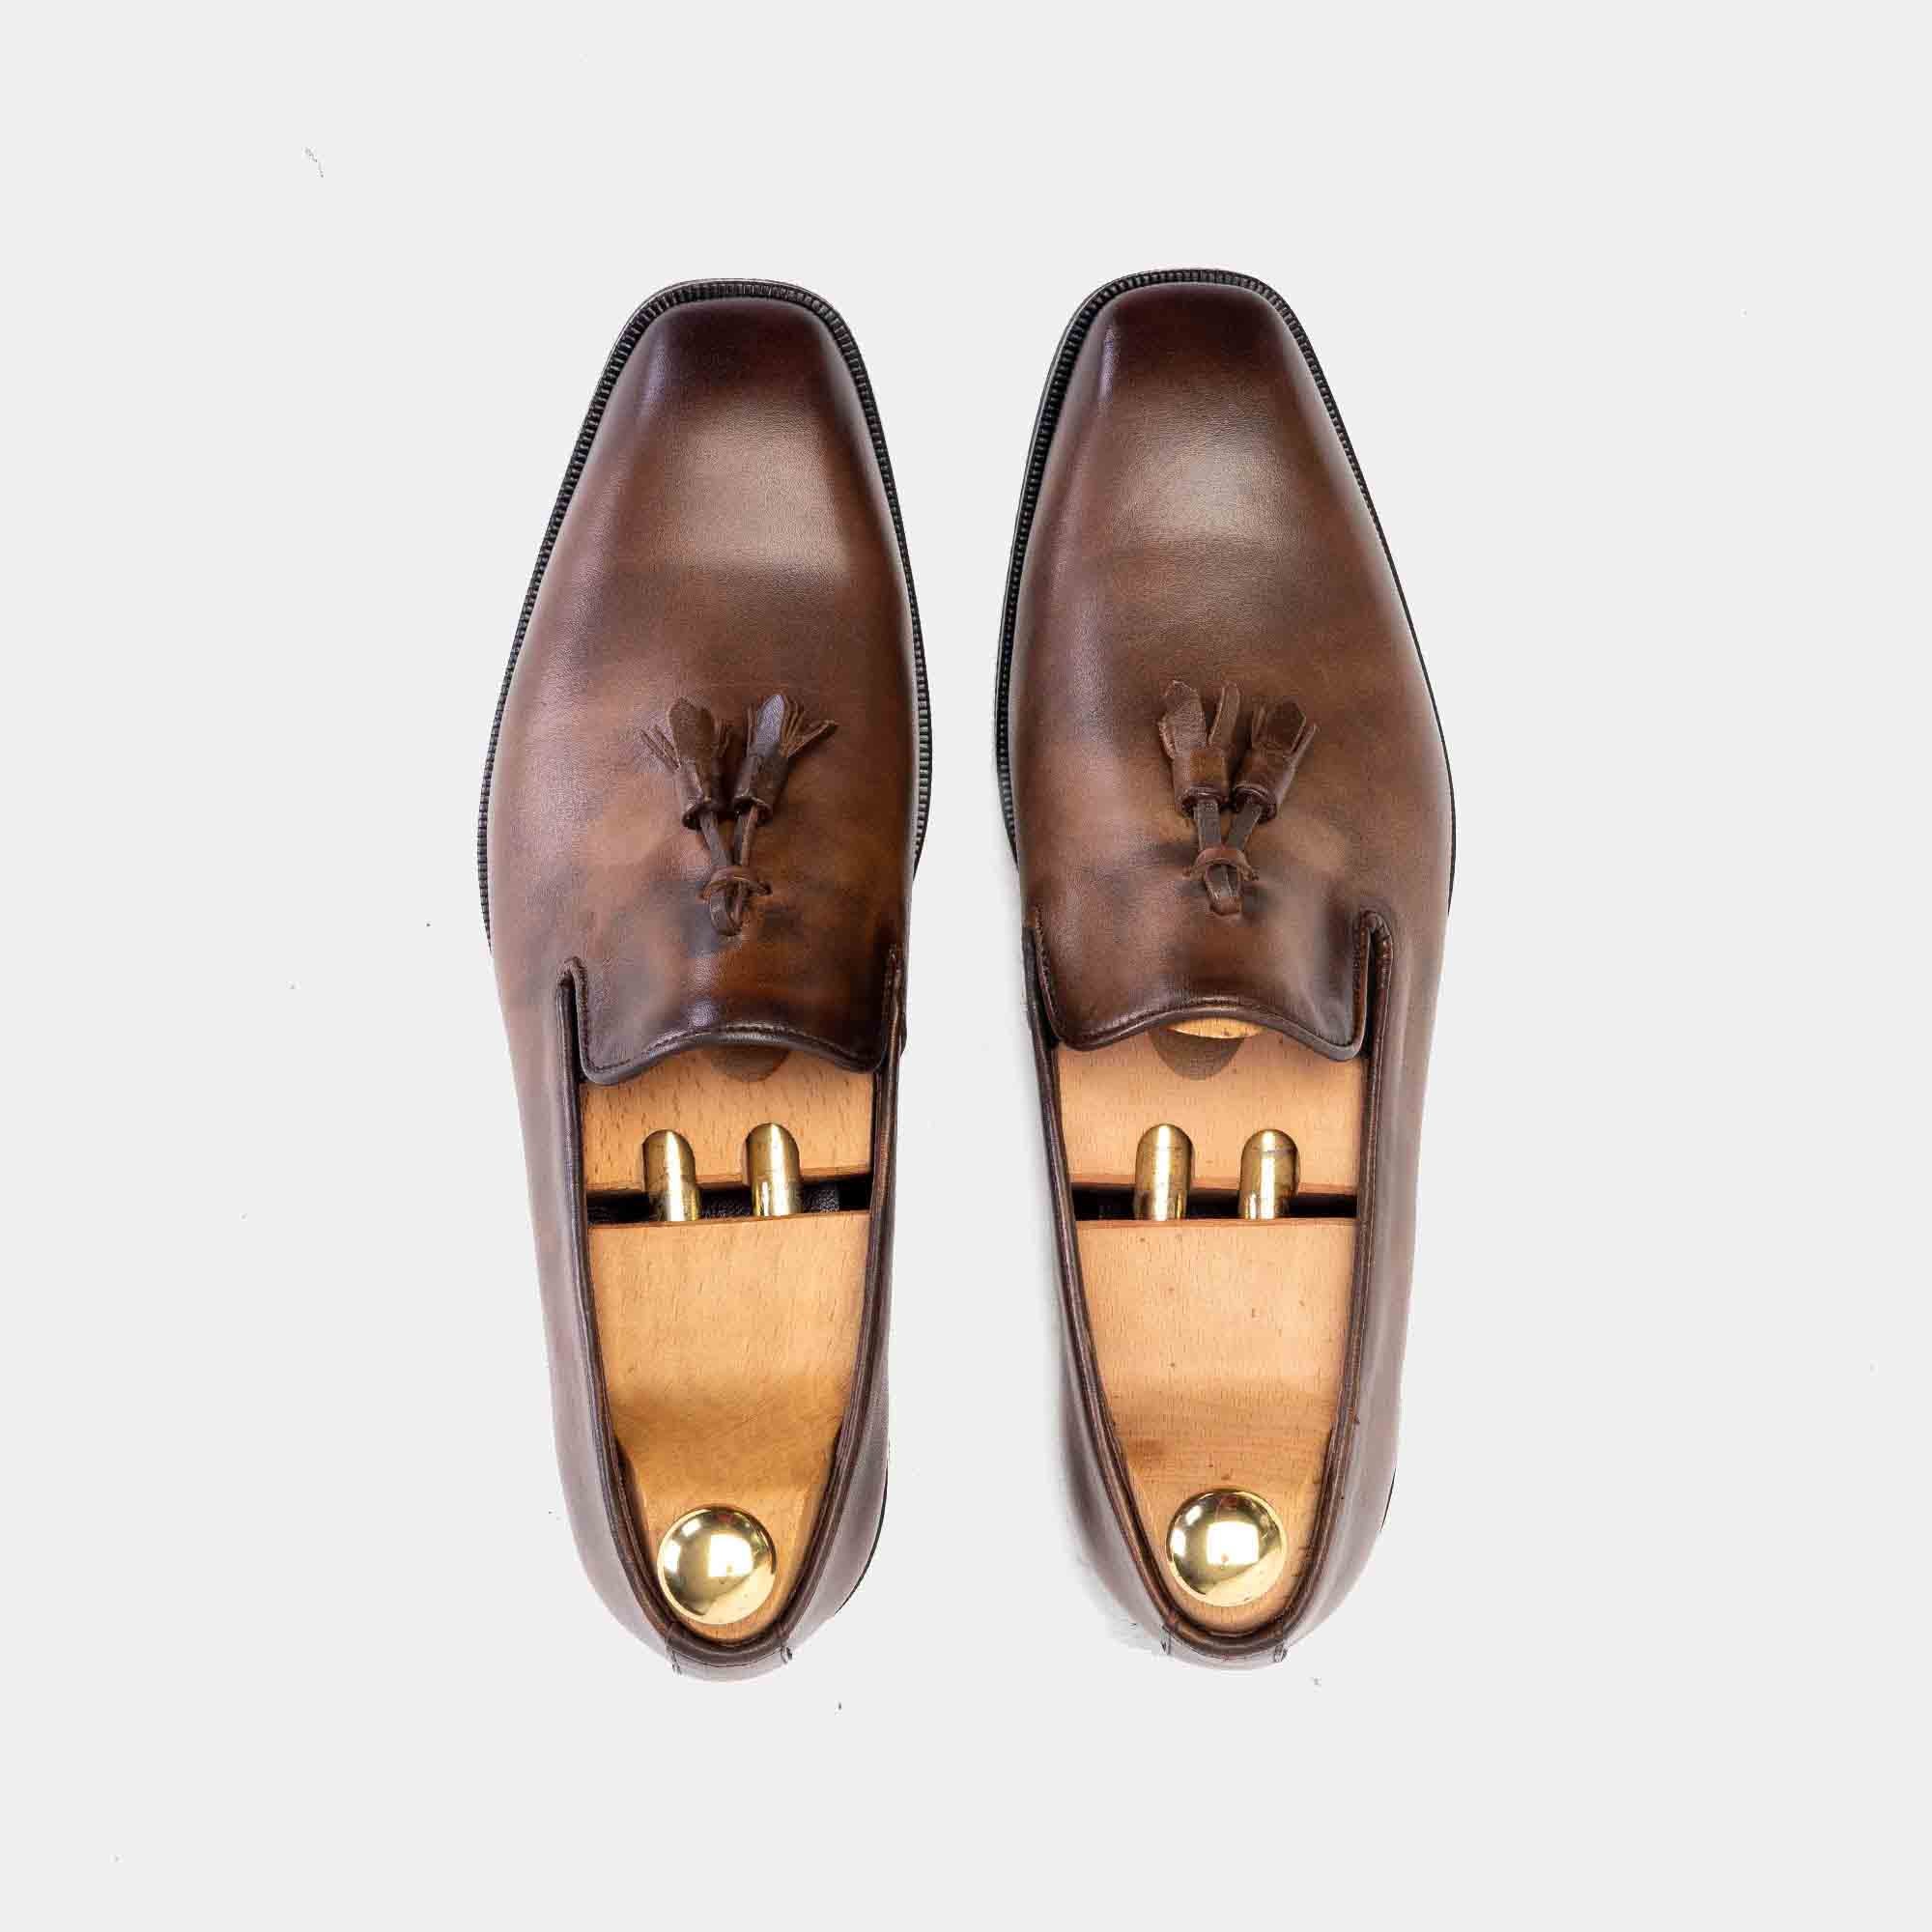 ''1302 Chaussure en cuir Marron vintage